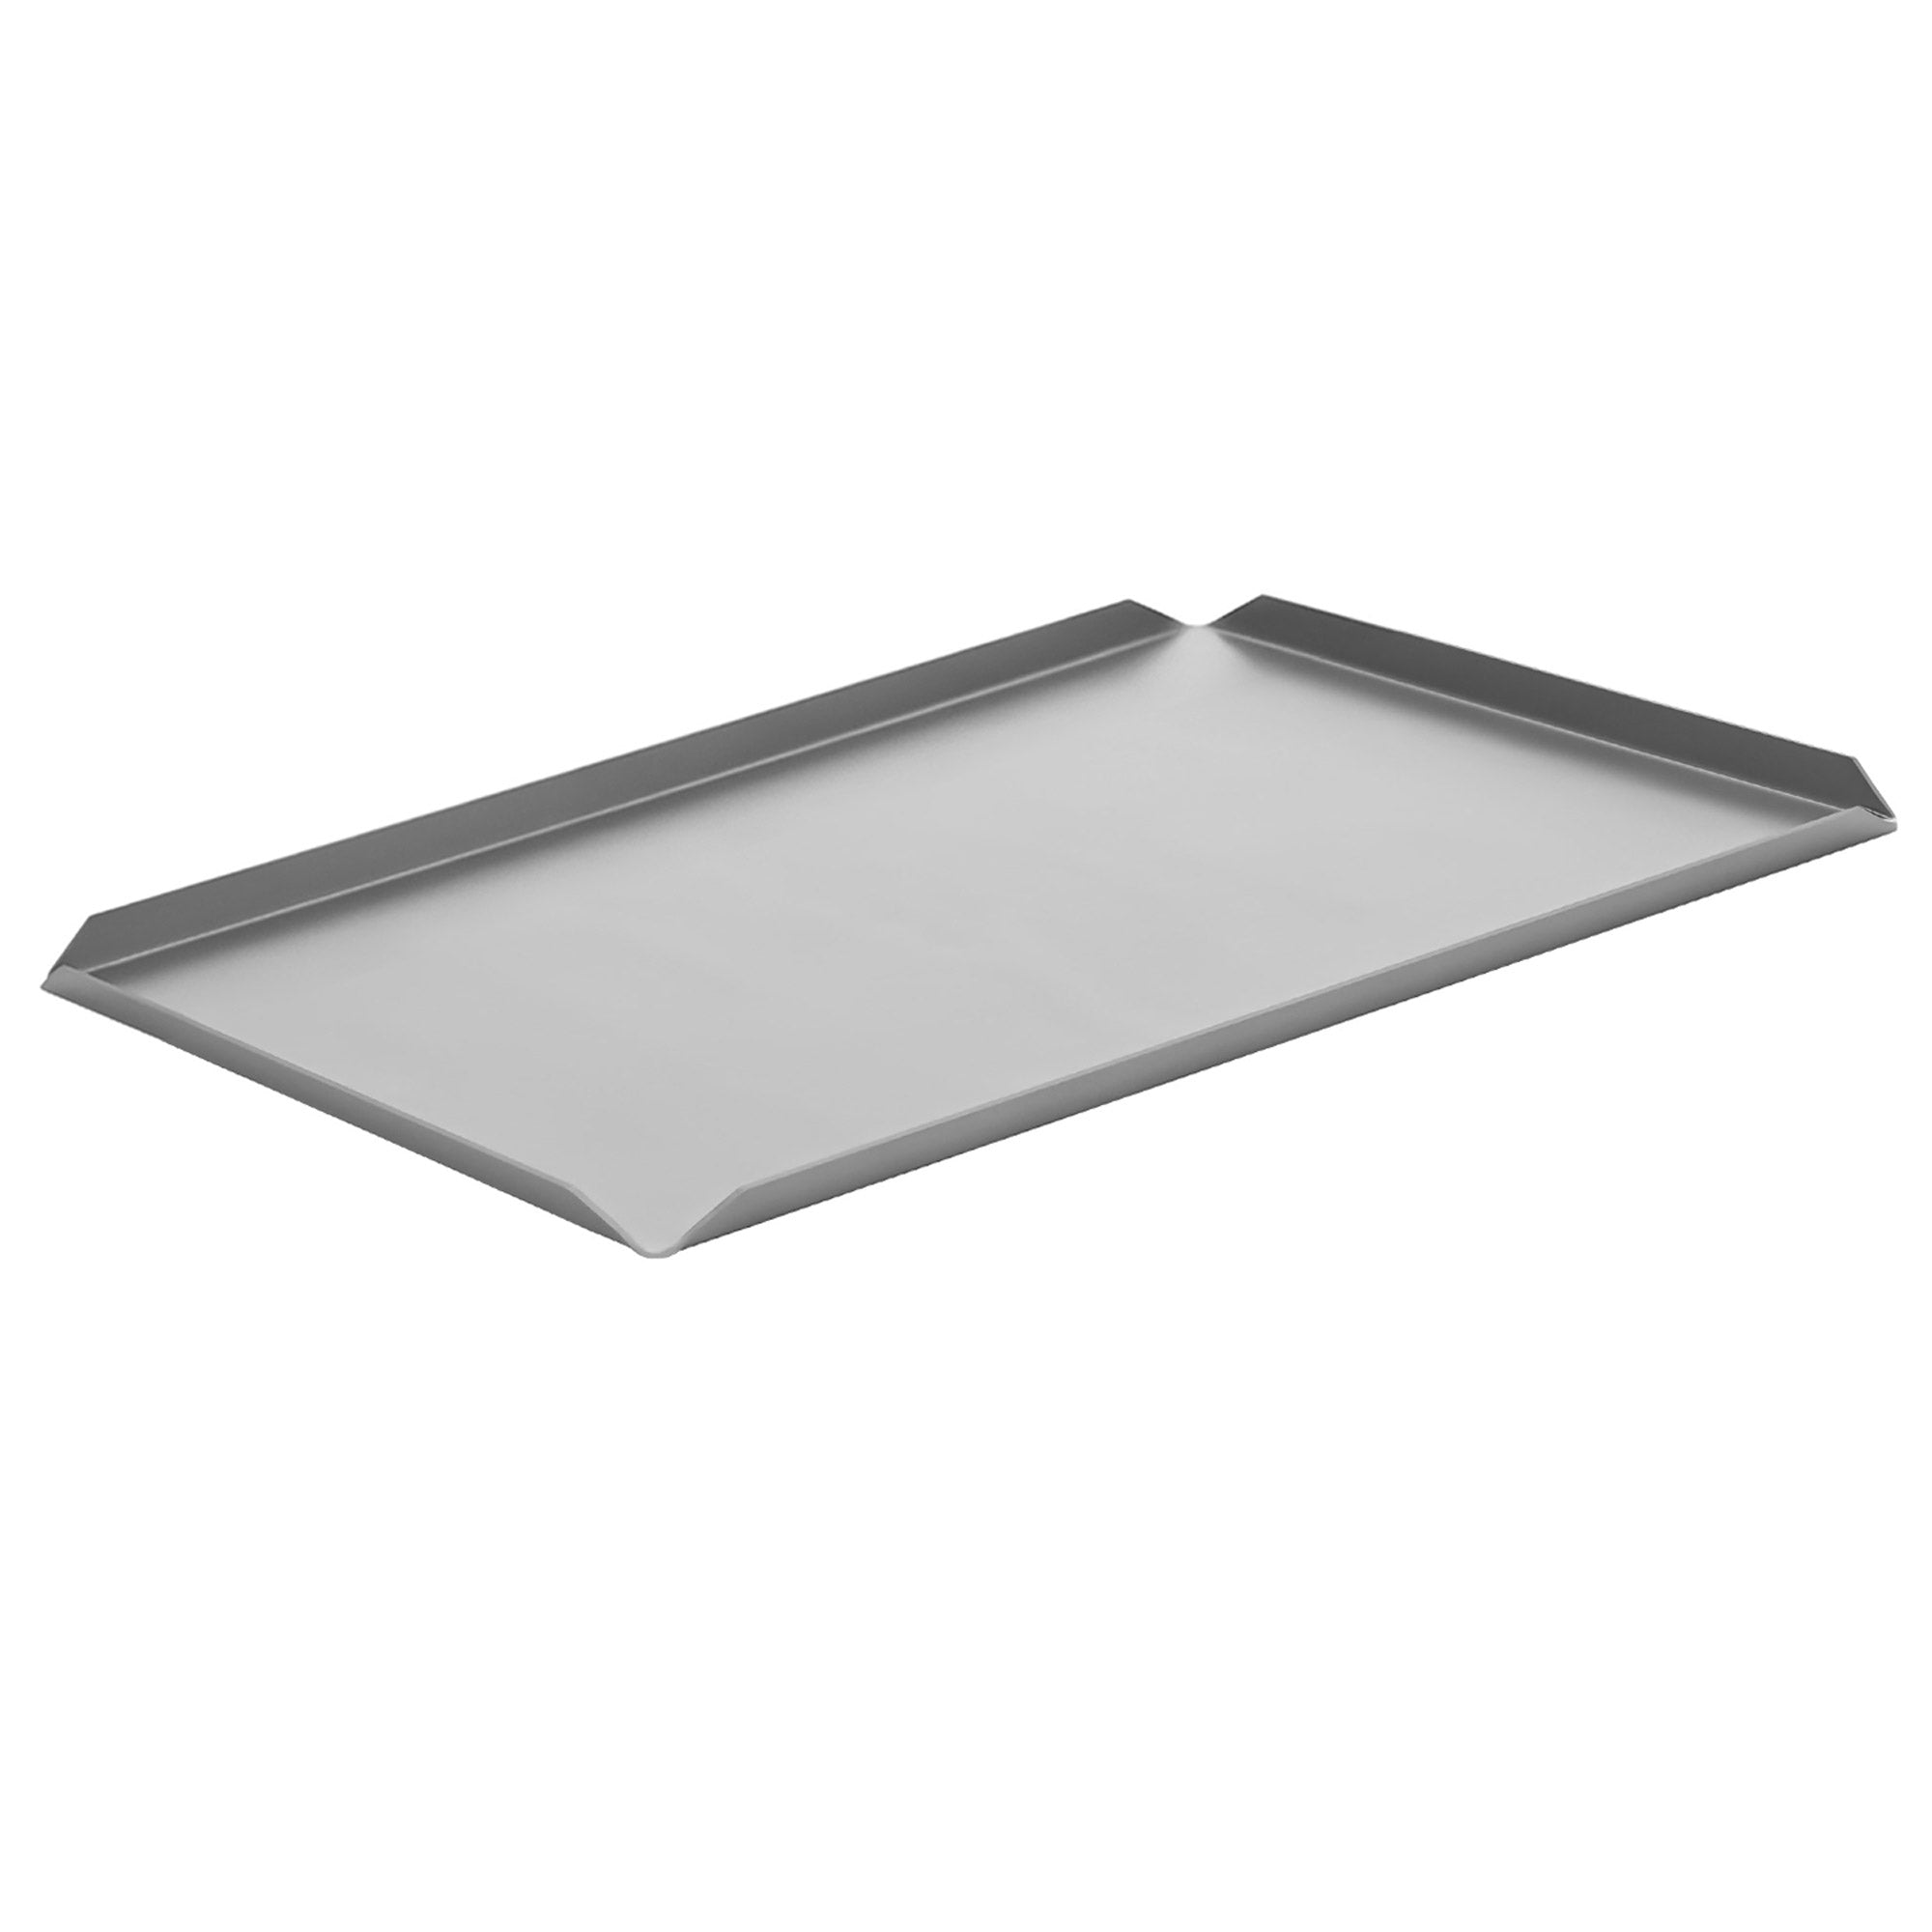 (5 броя) Алуминиева табела за сладкарски изделия и презентации - 600 x 150 x 10 mm - алуминий